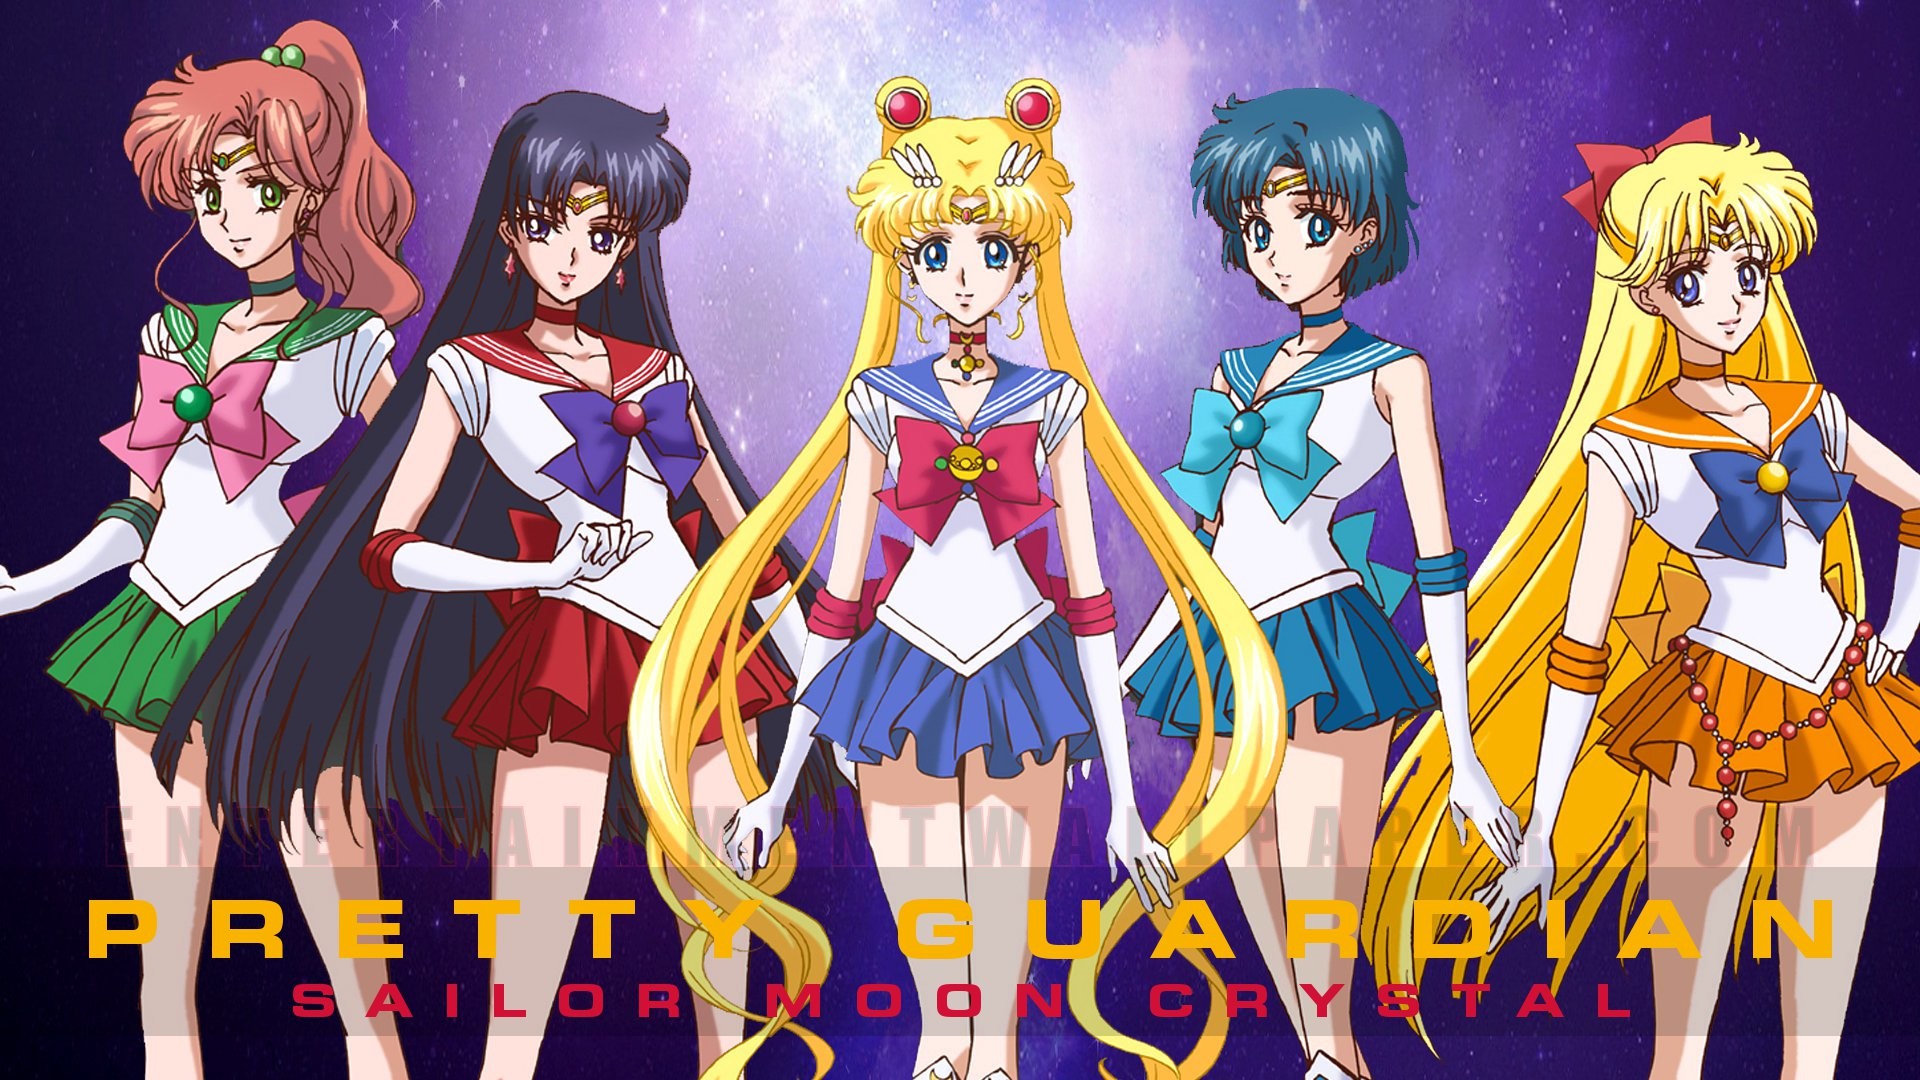 1920x1080 Pretty Guardian Sailor Moon Crystal Wallpaper - Original size, download now.